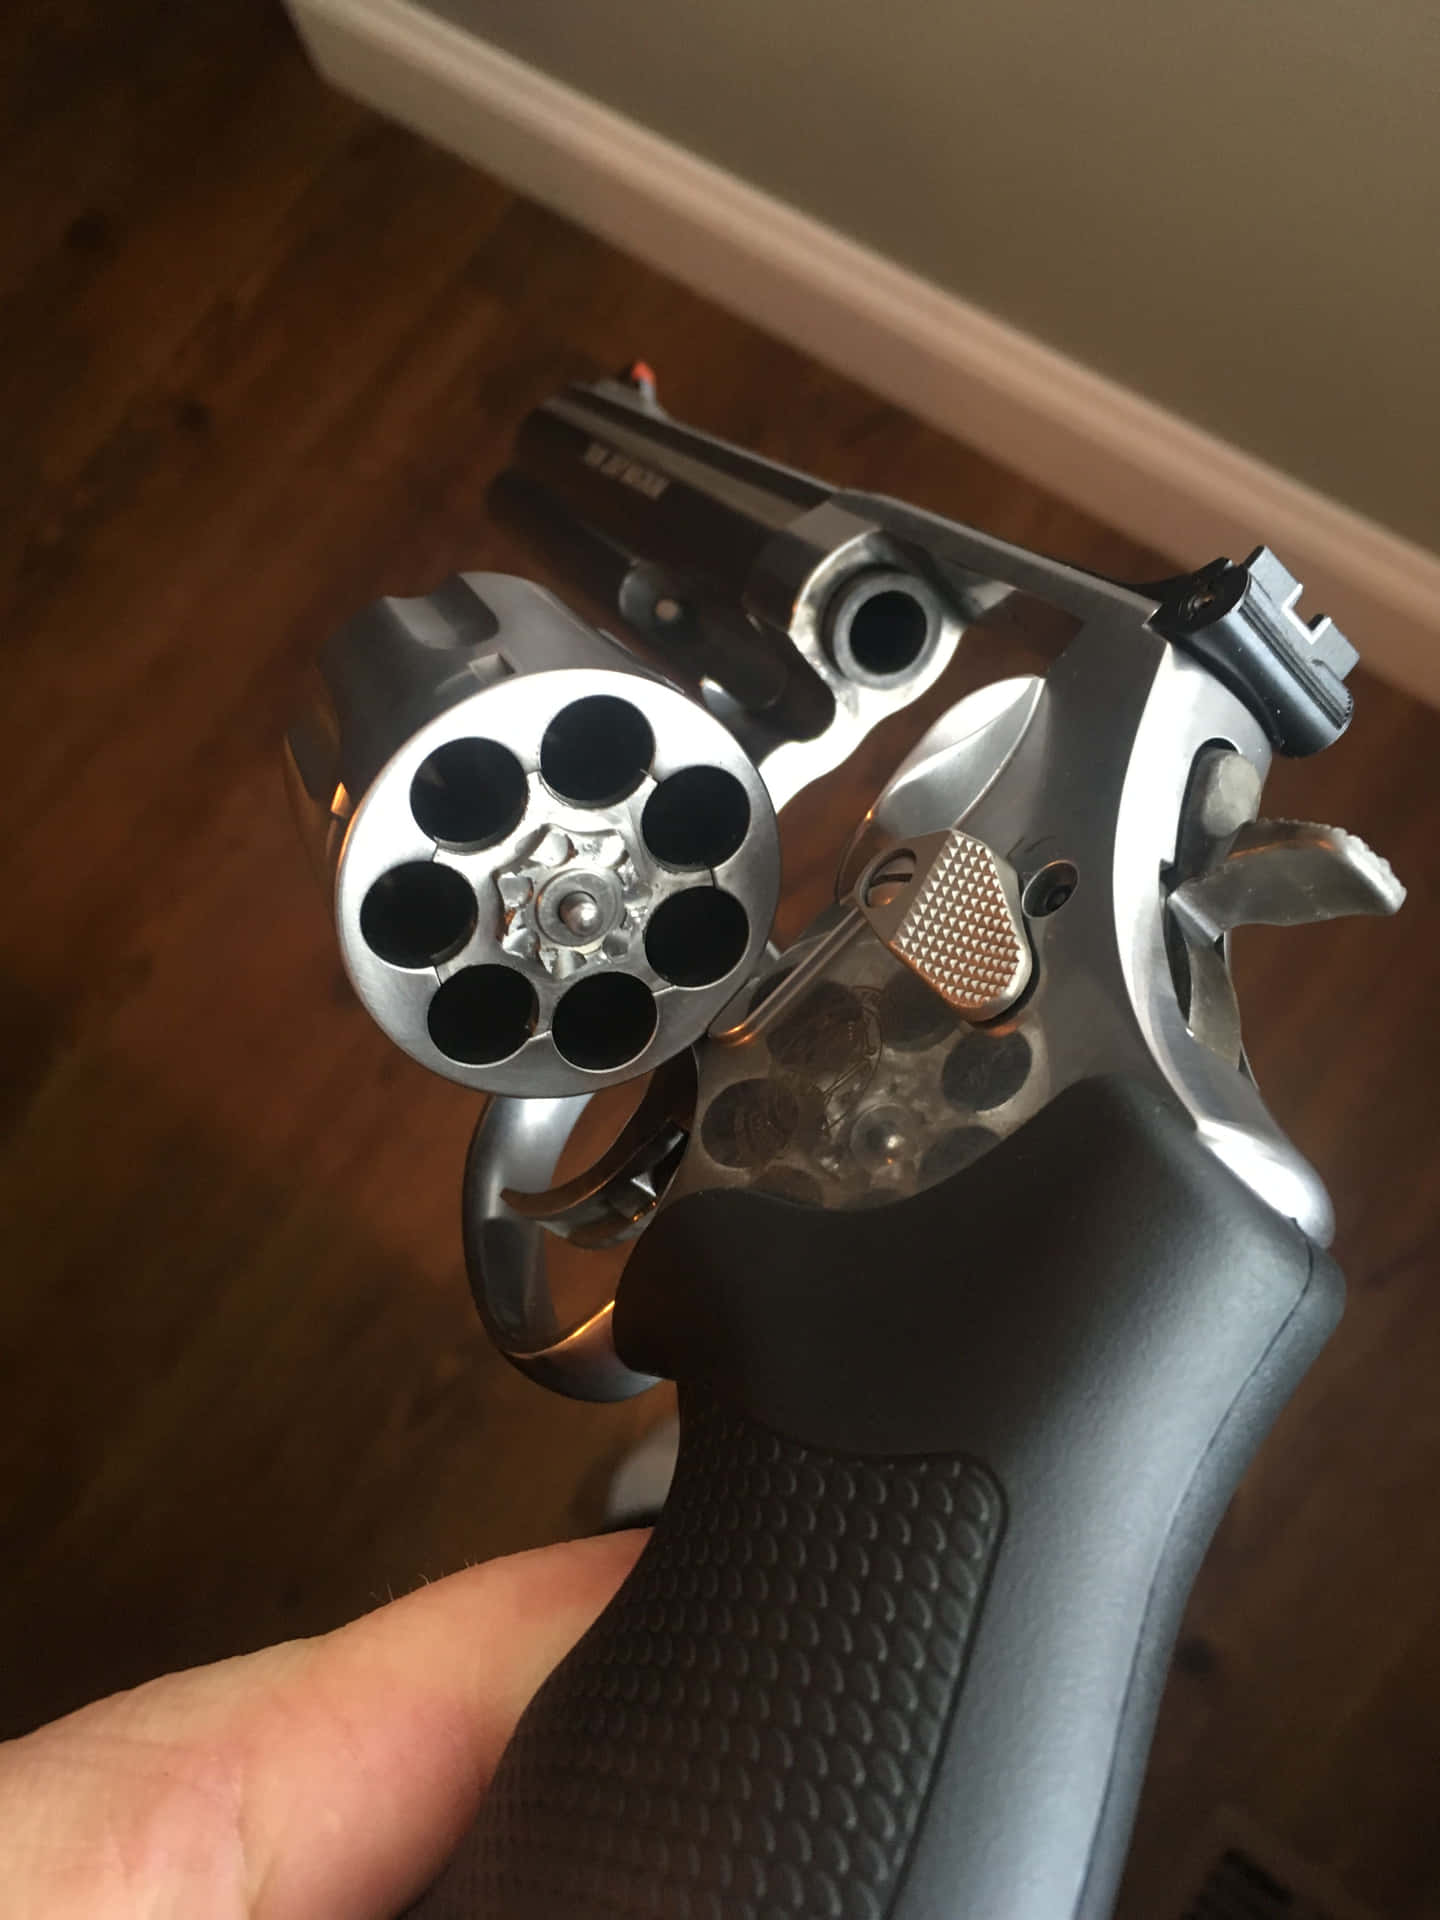 Pistol Close-Up Picture